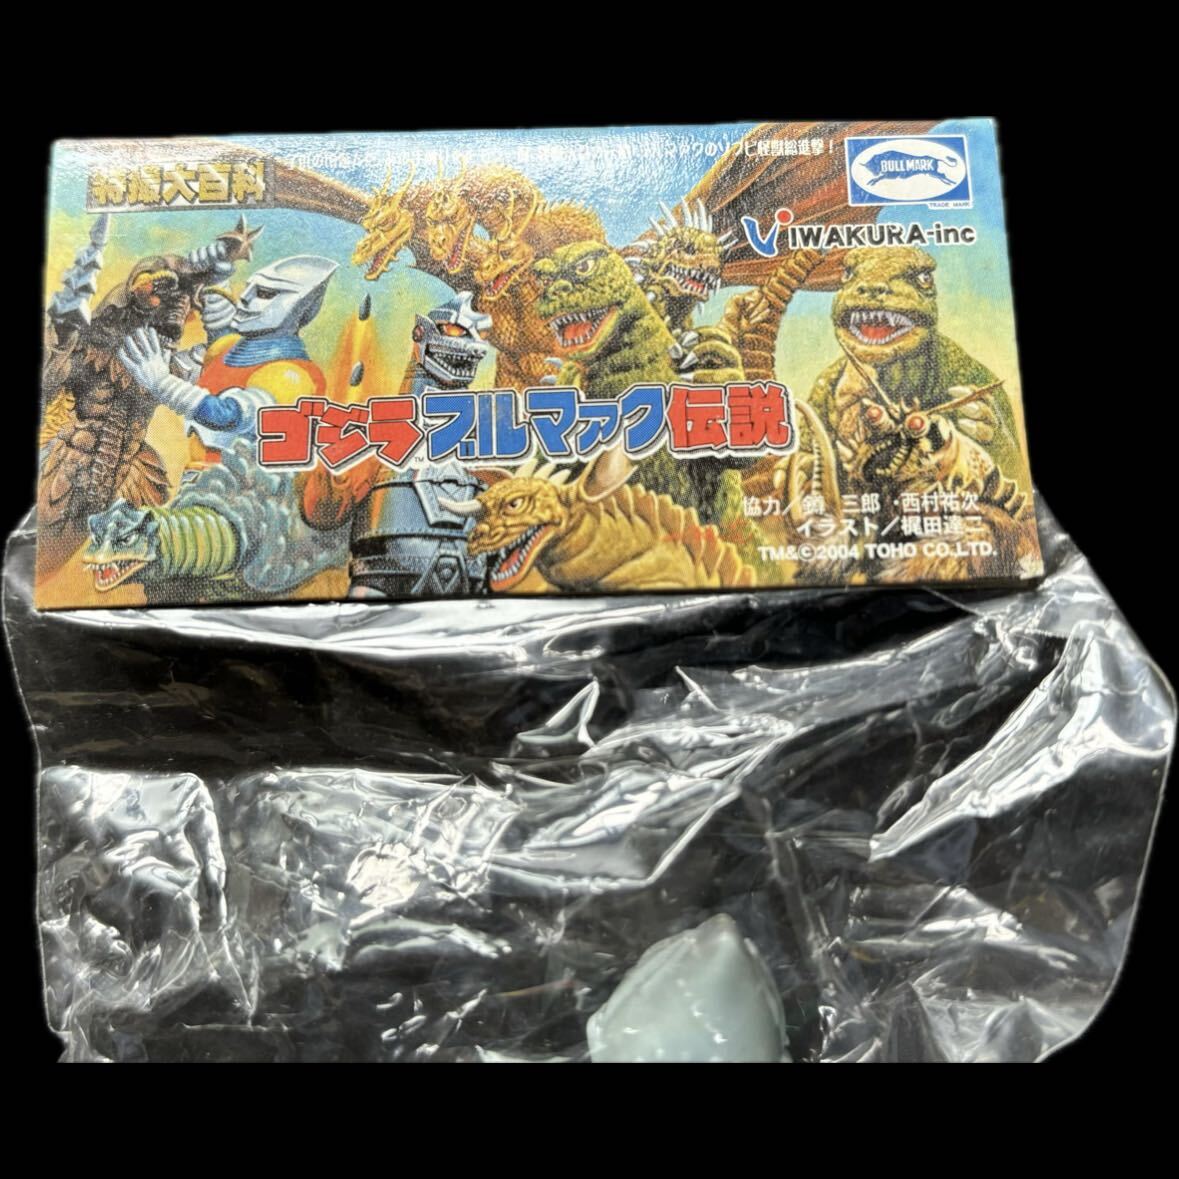 [.]iwakla special effects large various subjects Godzilla bruma.k legend jet Jaguar Mini size sofvi box none 